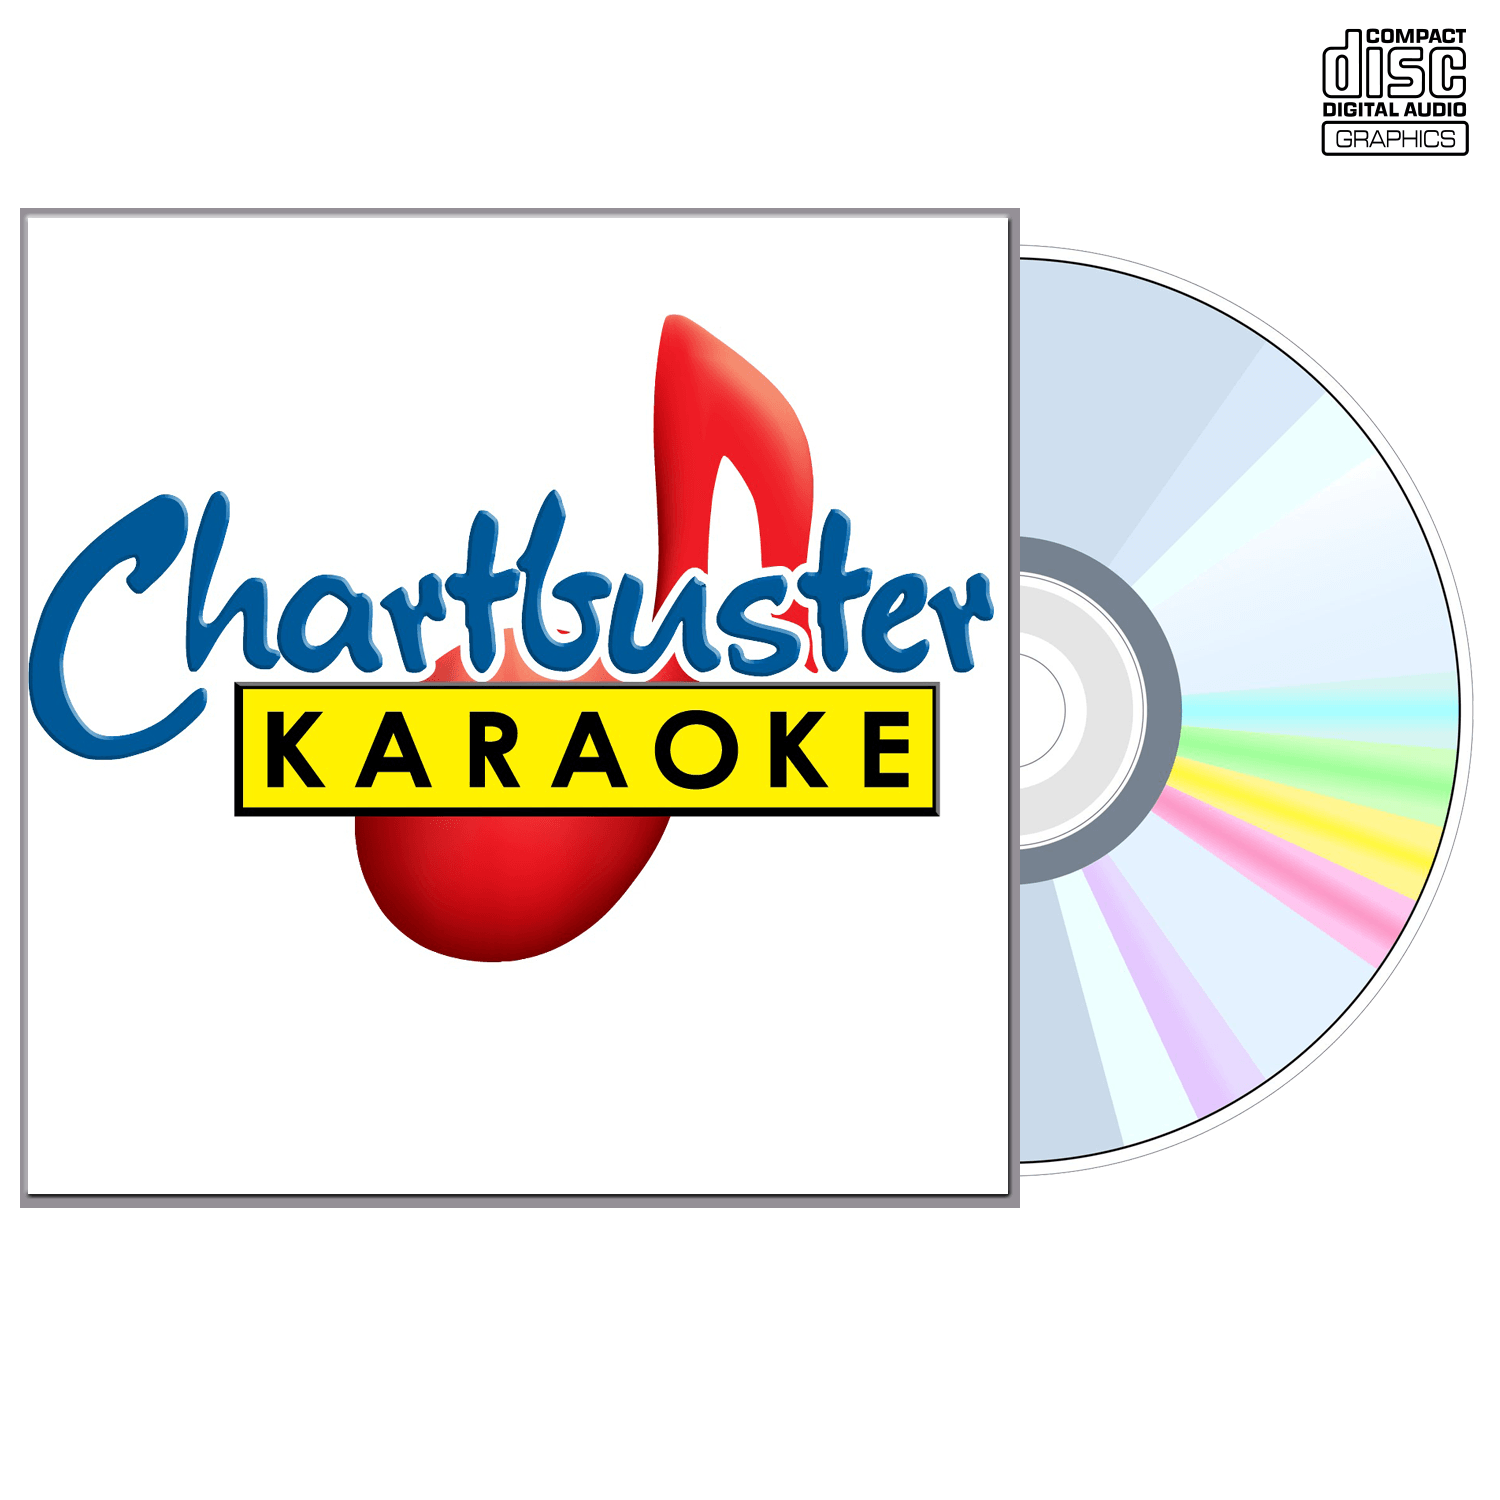 70's Collection Vol 03 - CD+G - Chartbuster Karaoke - Karaoke Home Entertainment